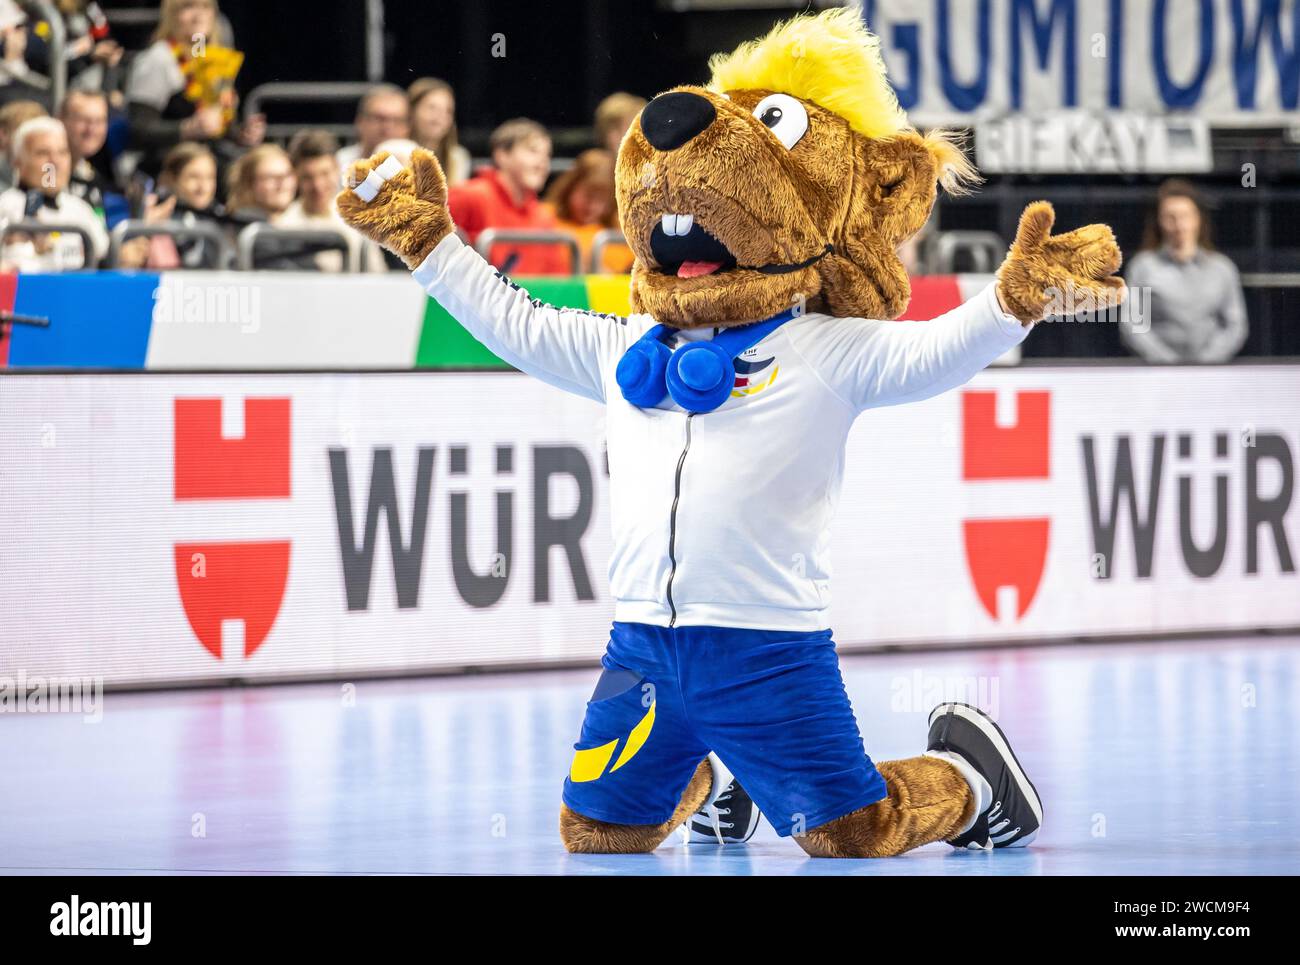 The European Championship mascot Hanniball Handball, draw for the